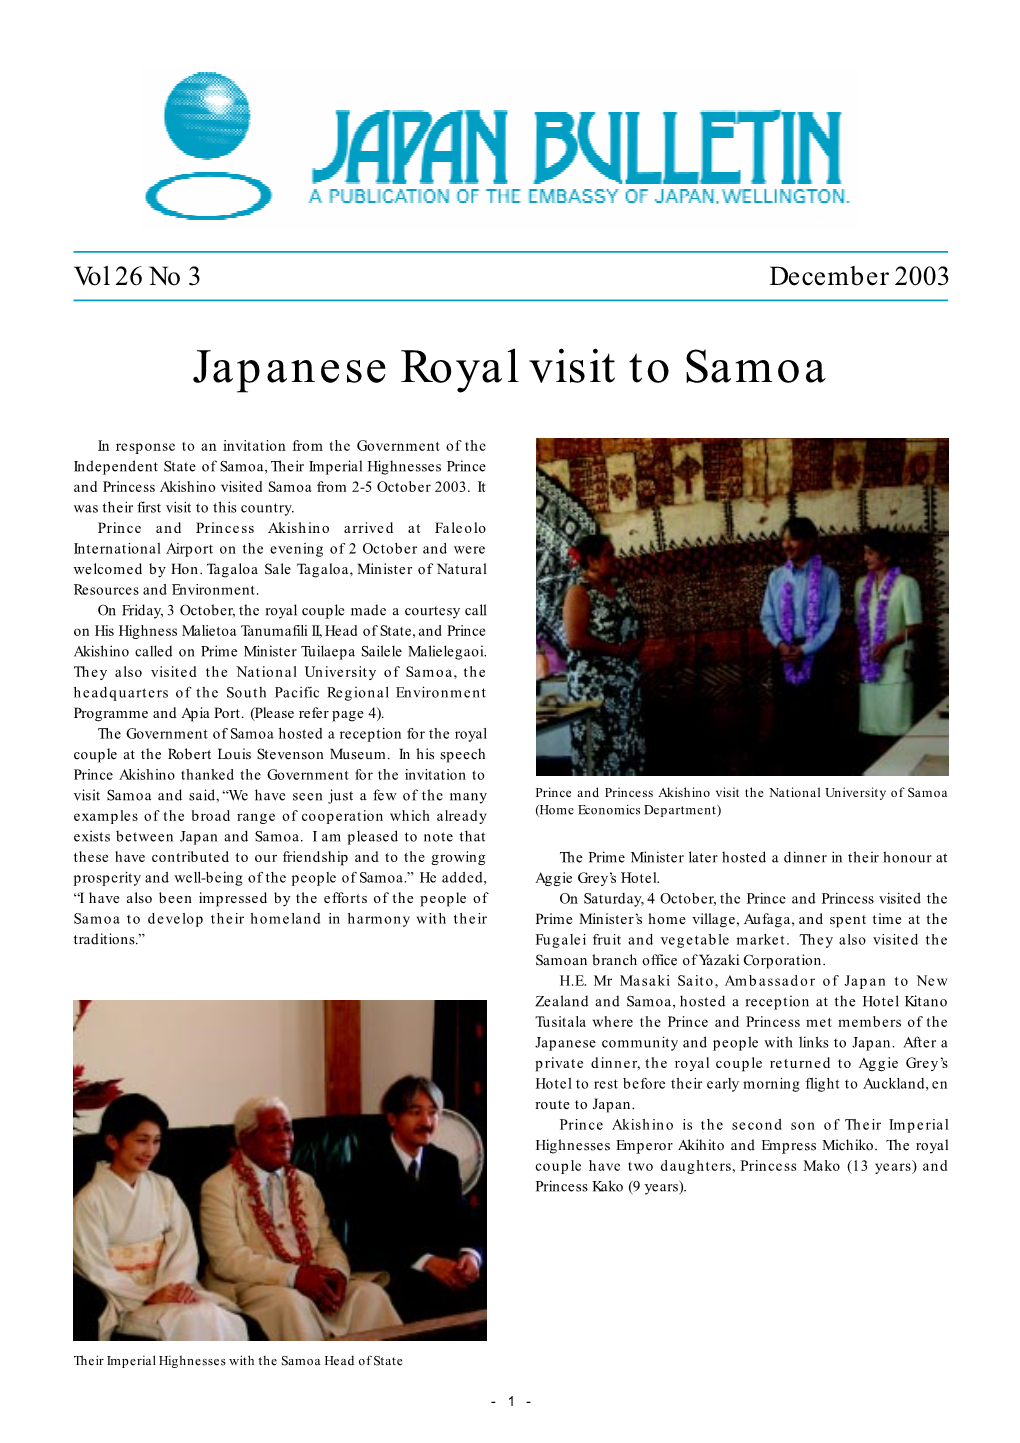 Japanese Royal Visit to Samoa